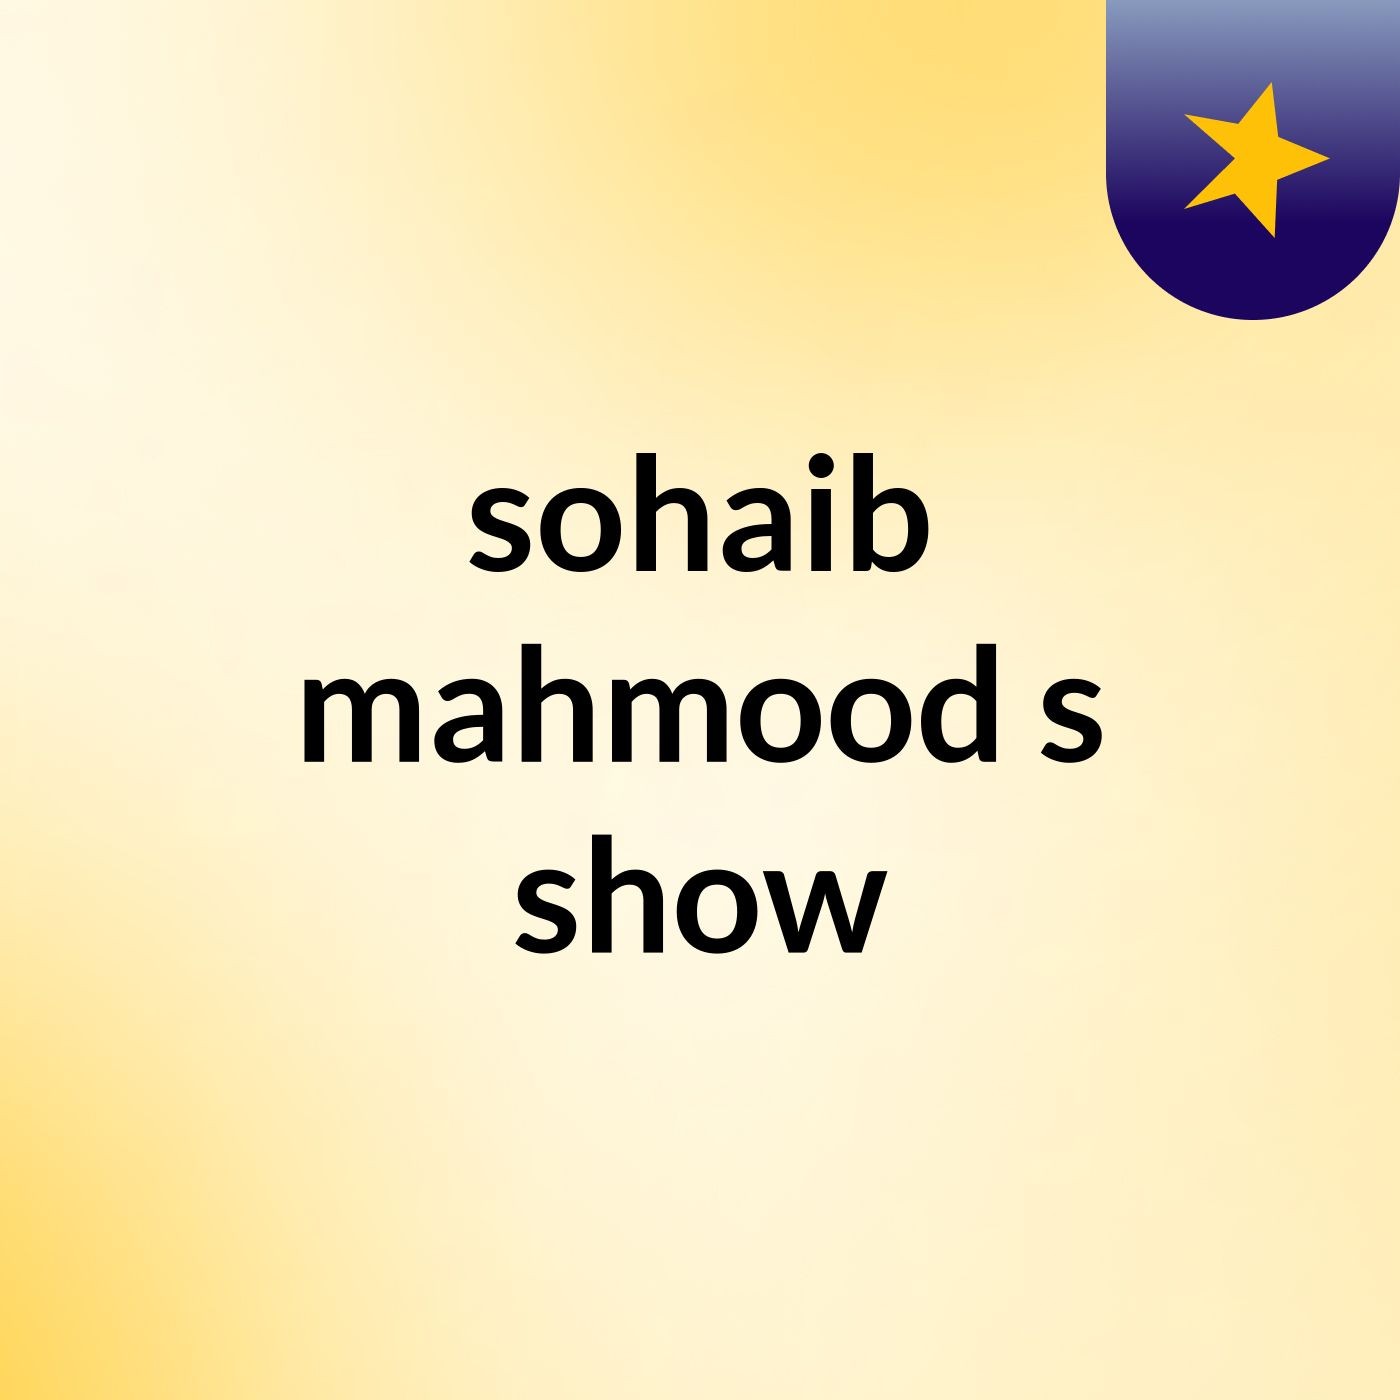 sohaib mahmood's show